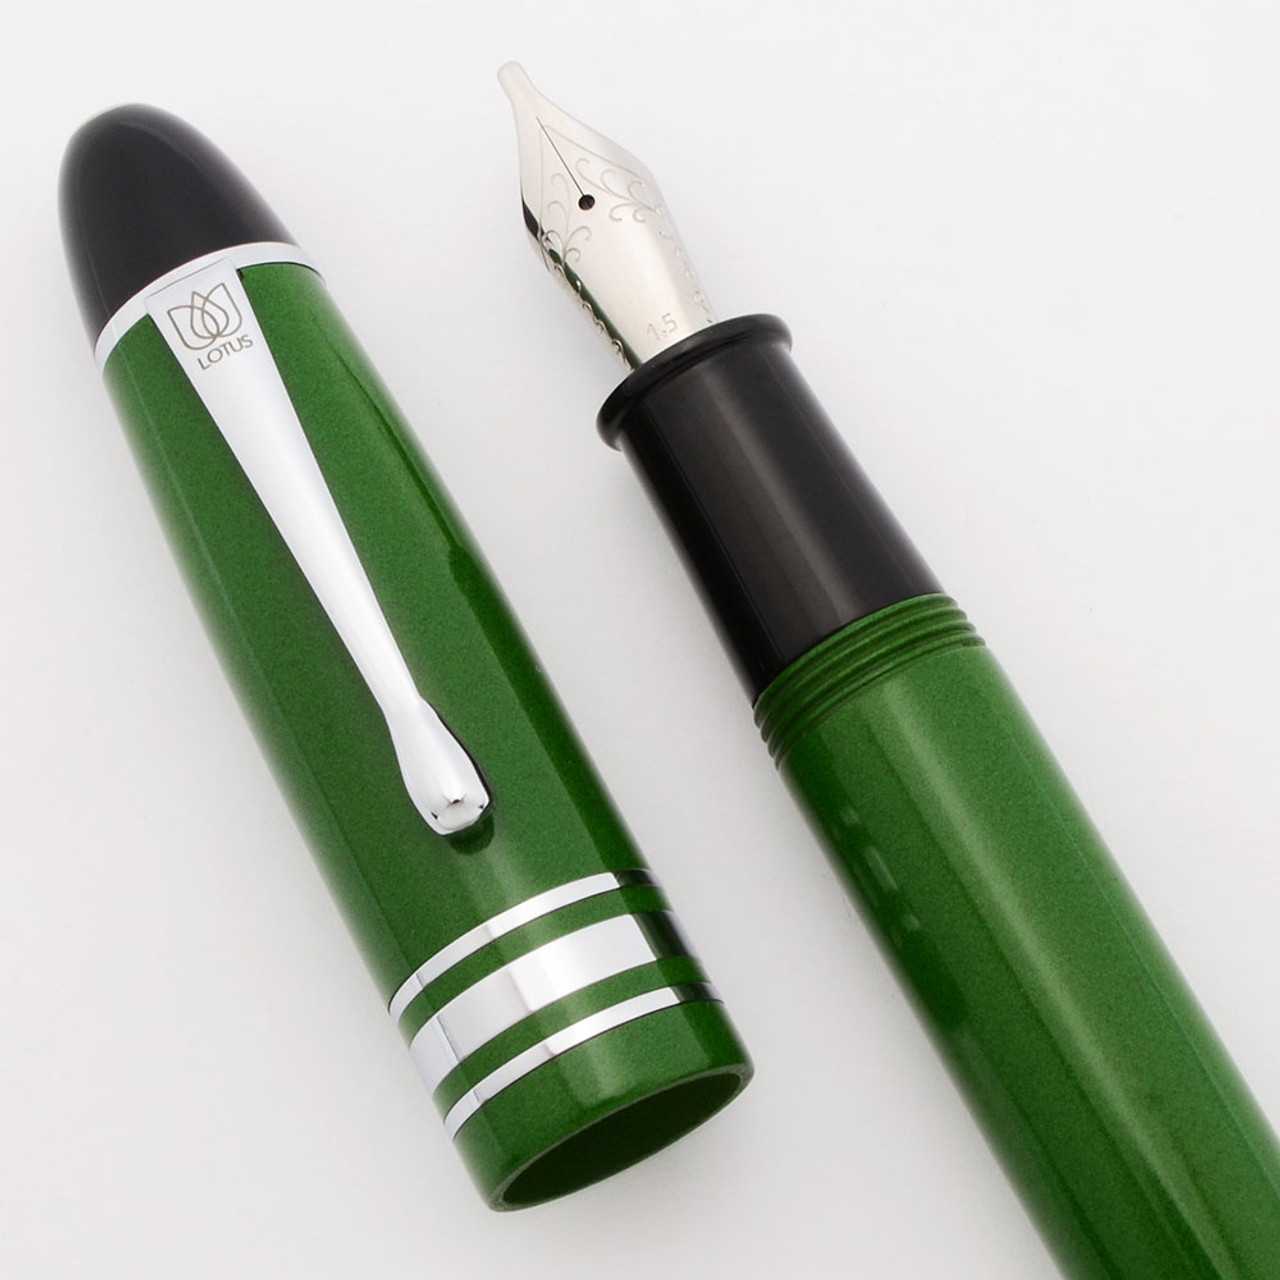 Lotus Pens "Everest" Oversize Fountain Pen - Nikko Ebonite, JoWo #6 nibs (New in Box)